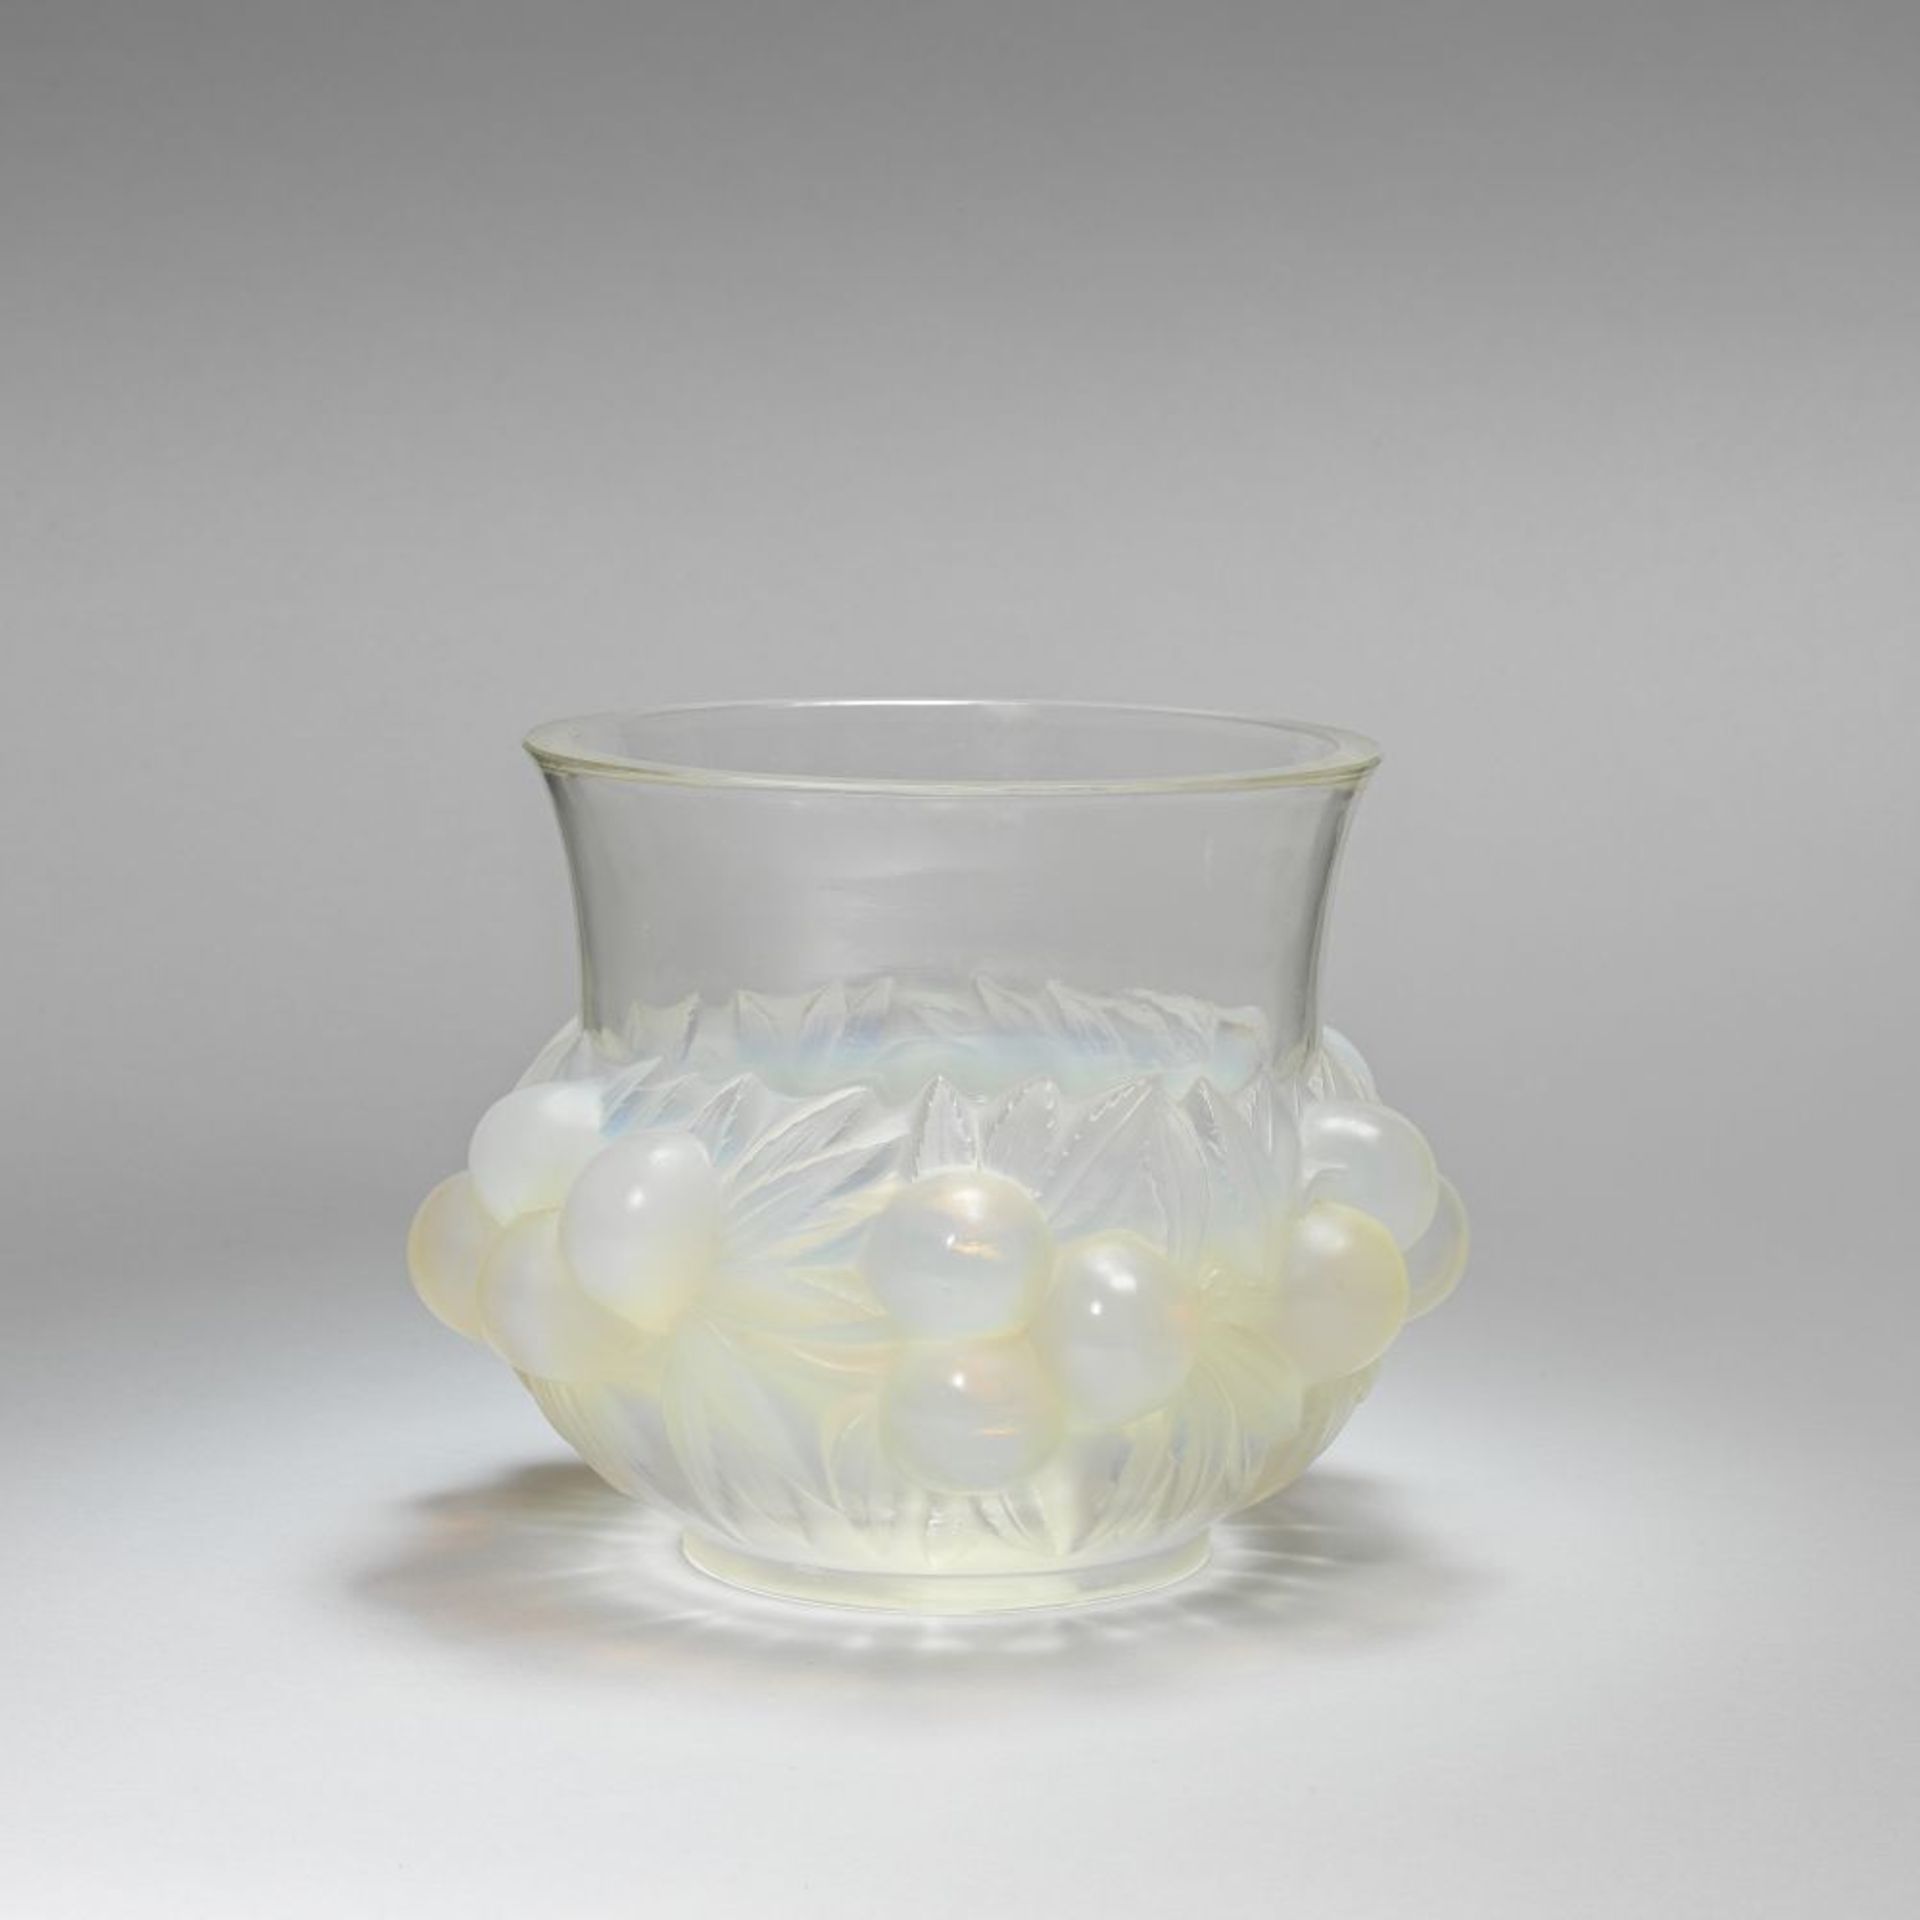 Ren&#233; Lalique 'Prunes' vase, designed 1930 - Image 2 of 3